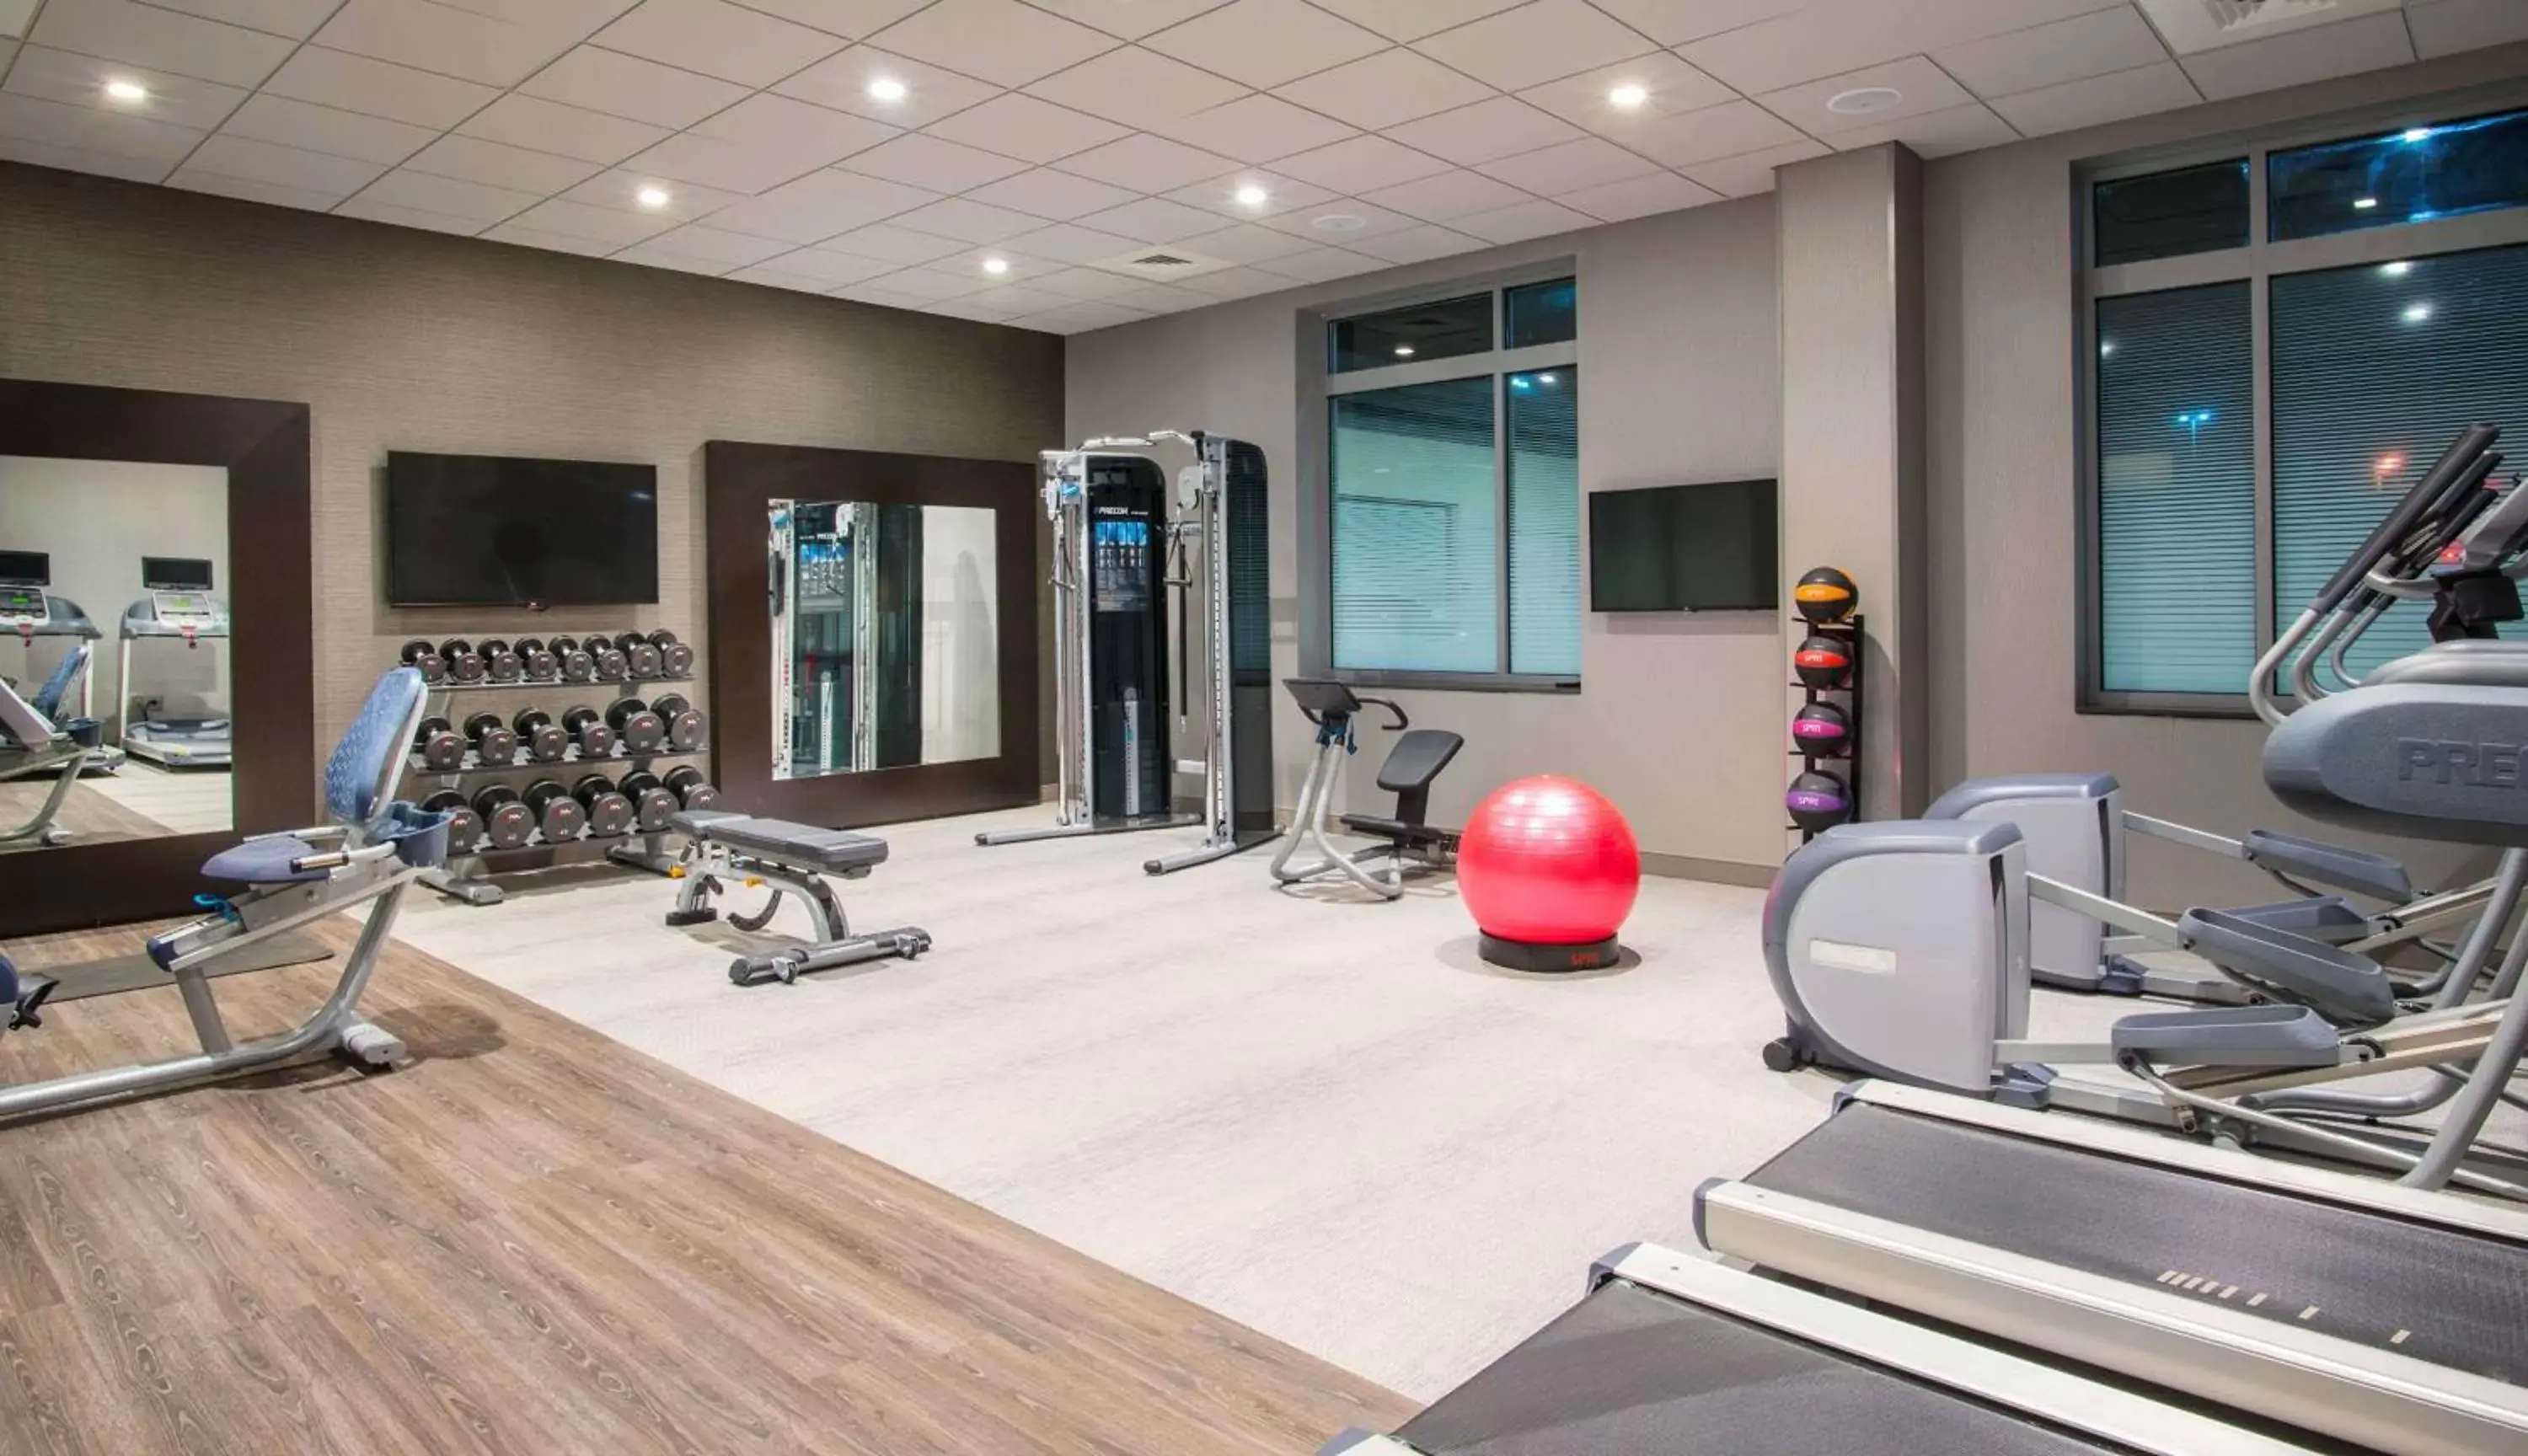 Fitness centre/facilities, Fitness Center/Facilities in Hilton Garden Inn Foxborough Patriot Place